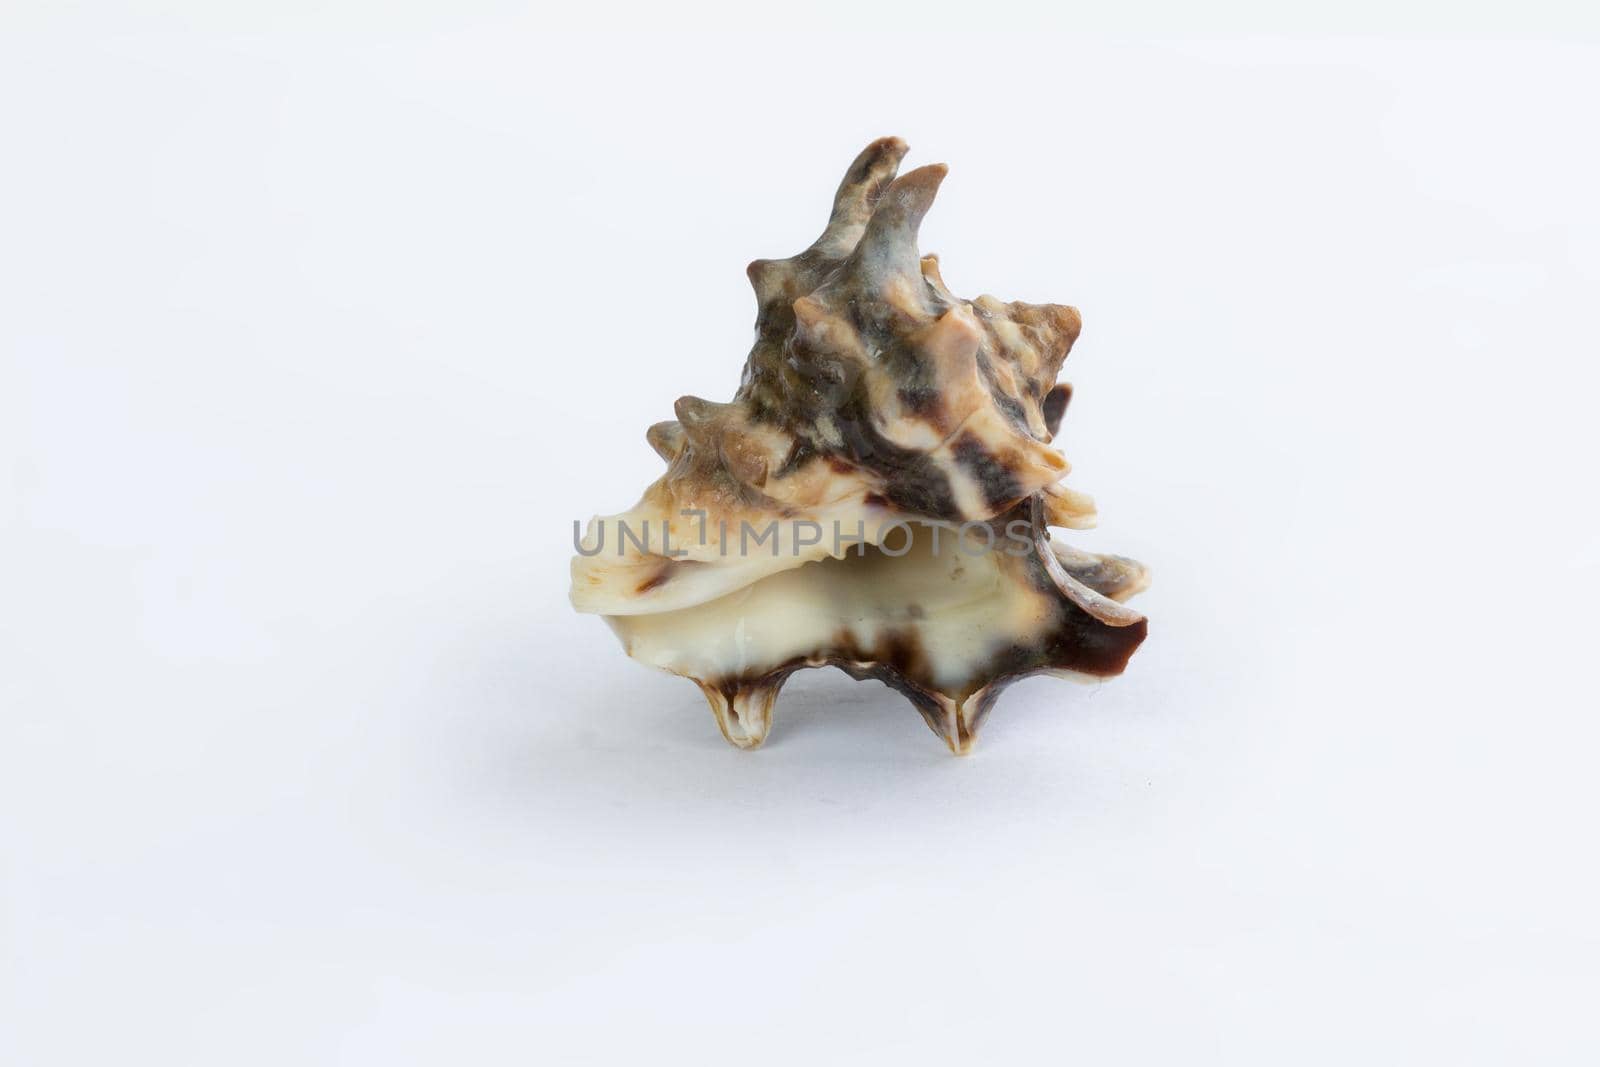 Marine life: light itchy gastropod seashell close-up on white background by VeraVerano